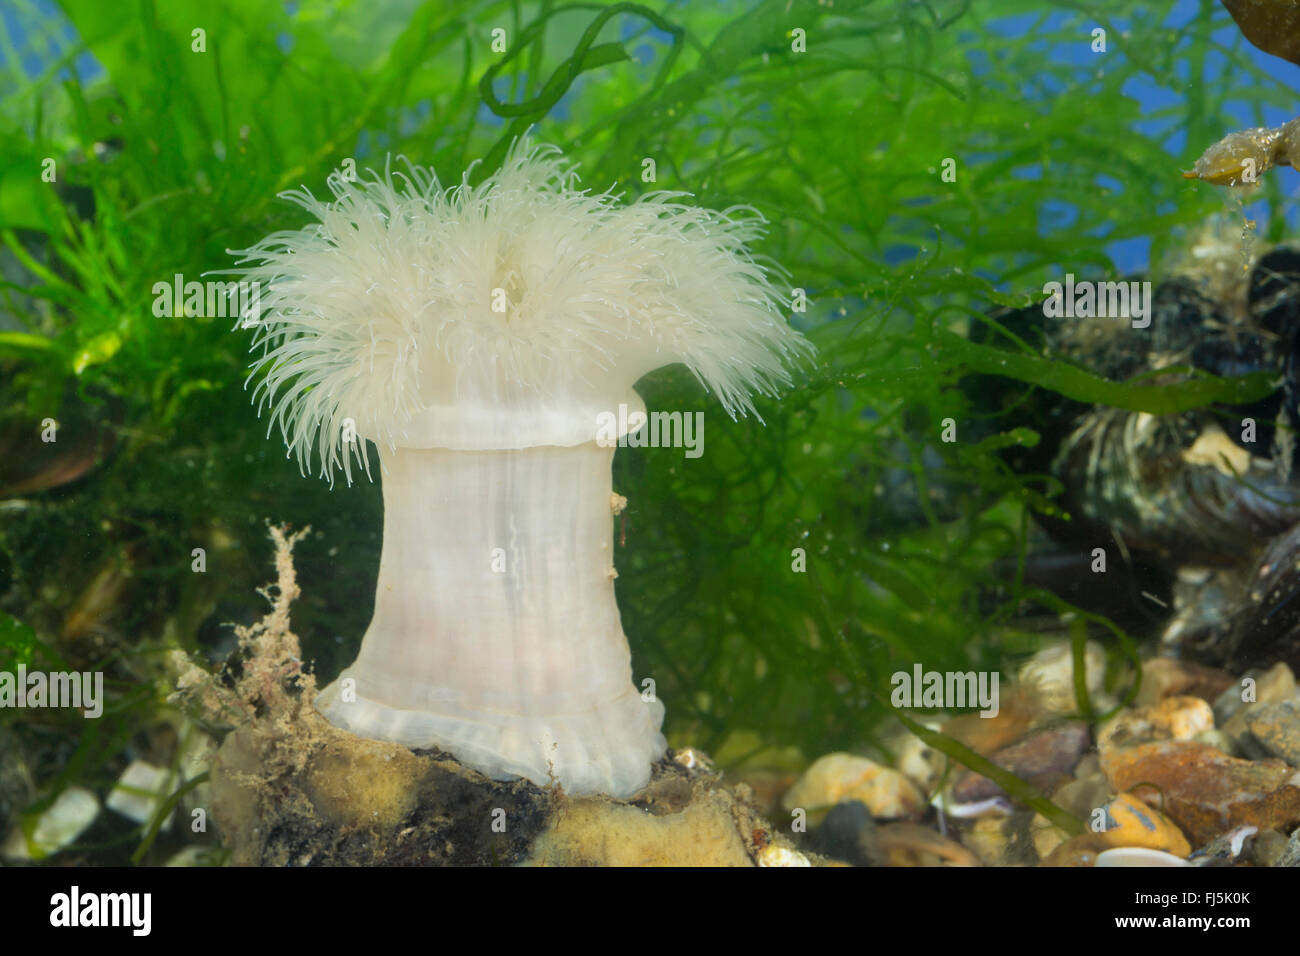 Plumose anemone, Frilled anemone, Plumose sea anemone, Brown sea anemone, Plumose anemone (Metridium senile), on the ground Stock Photo